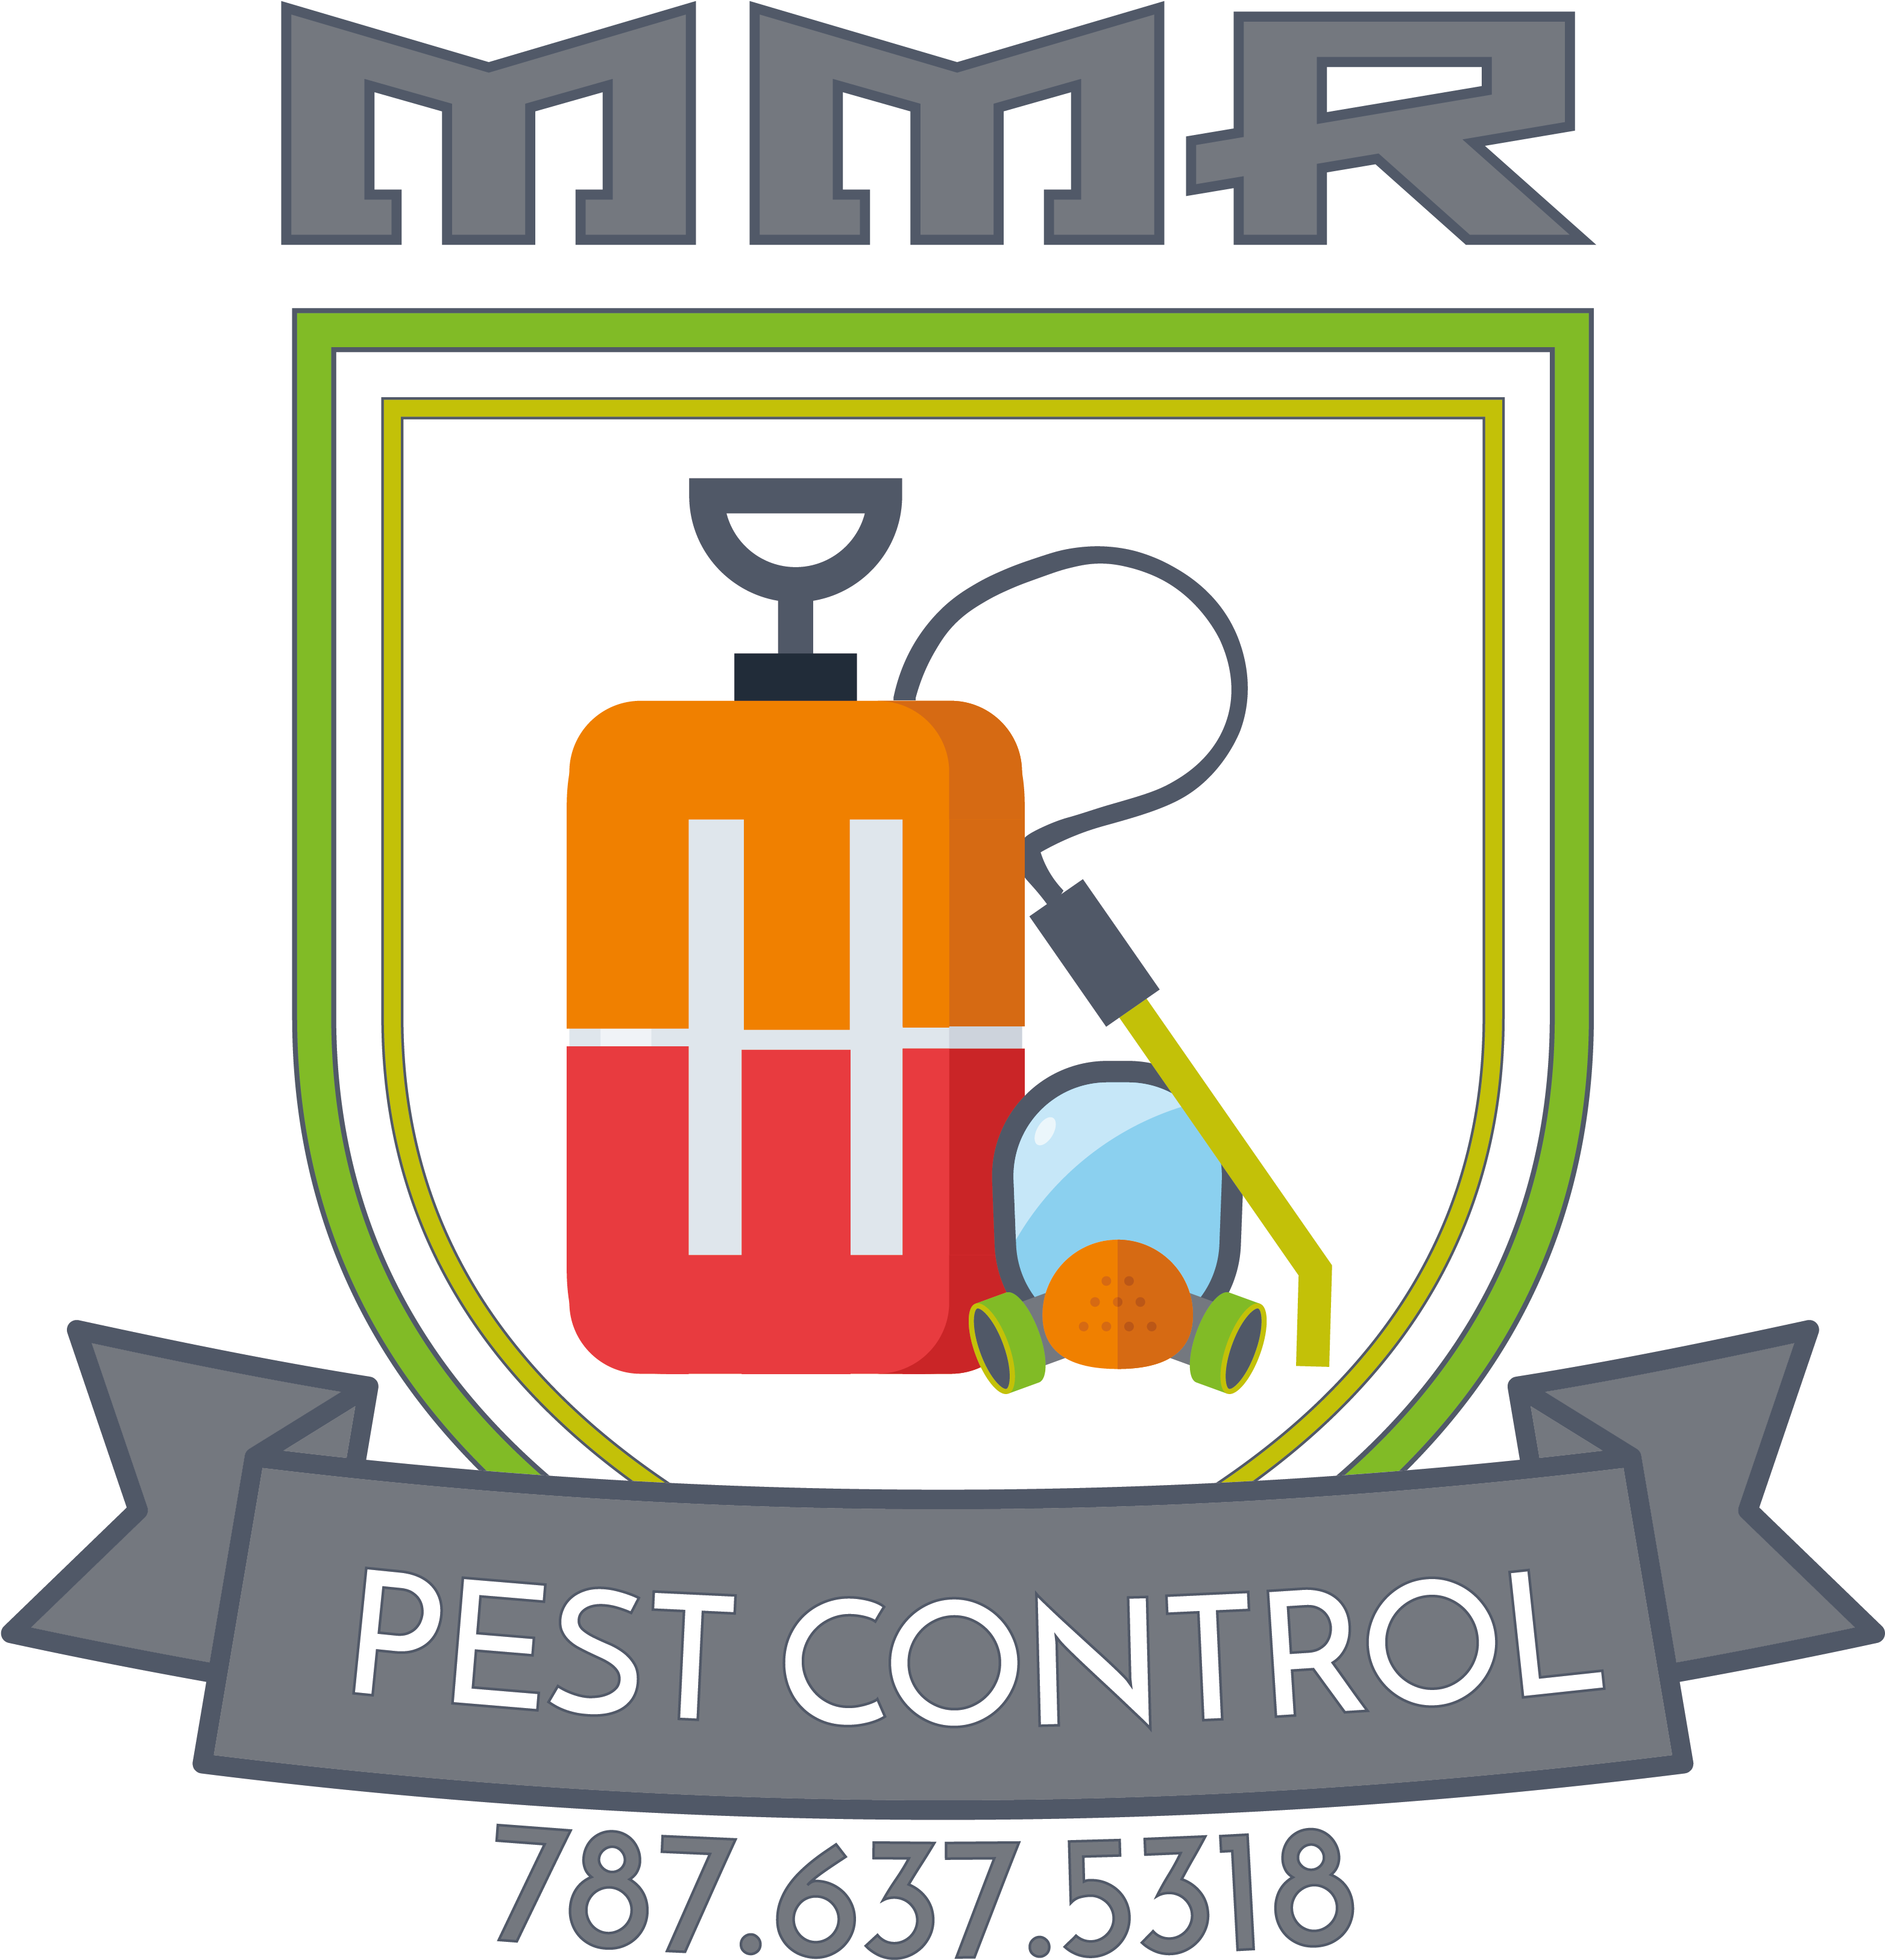 Pest Control (4167x4167)